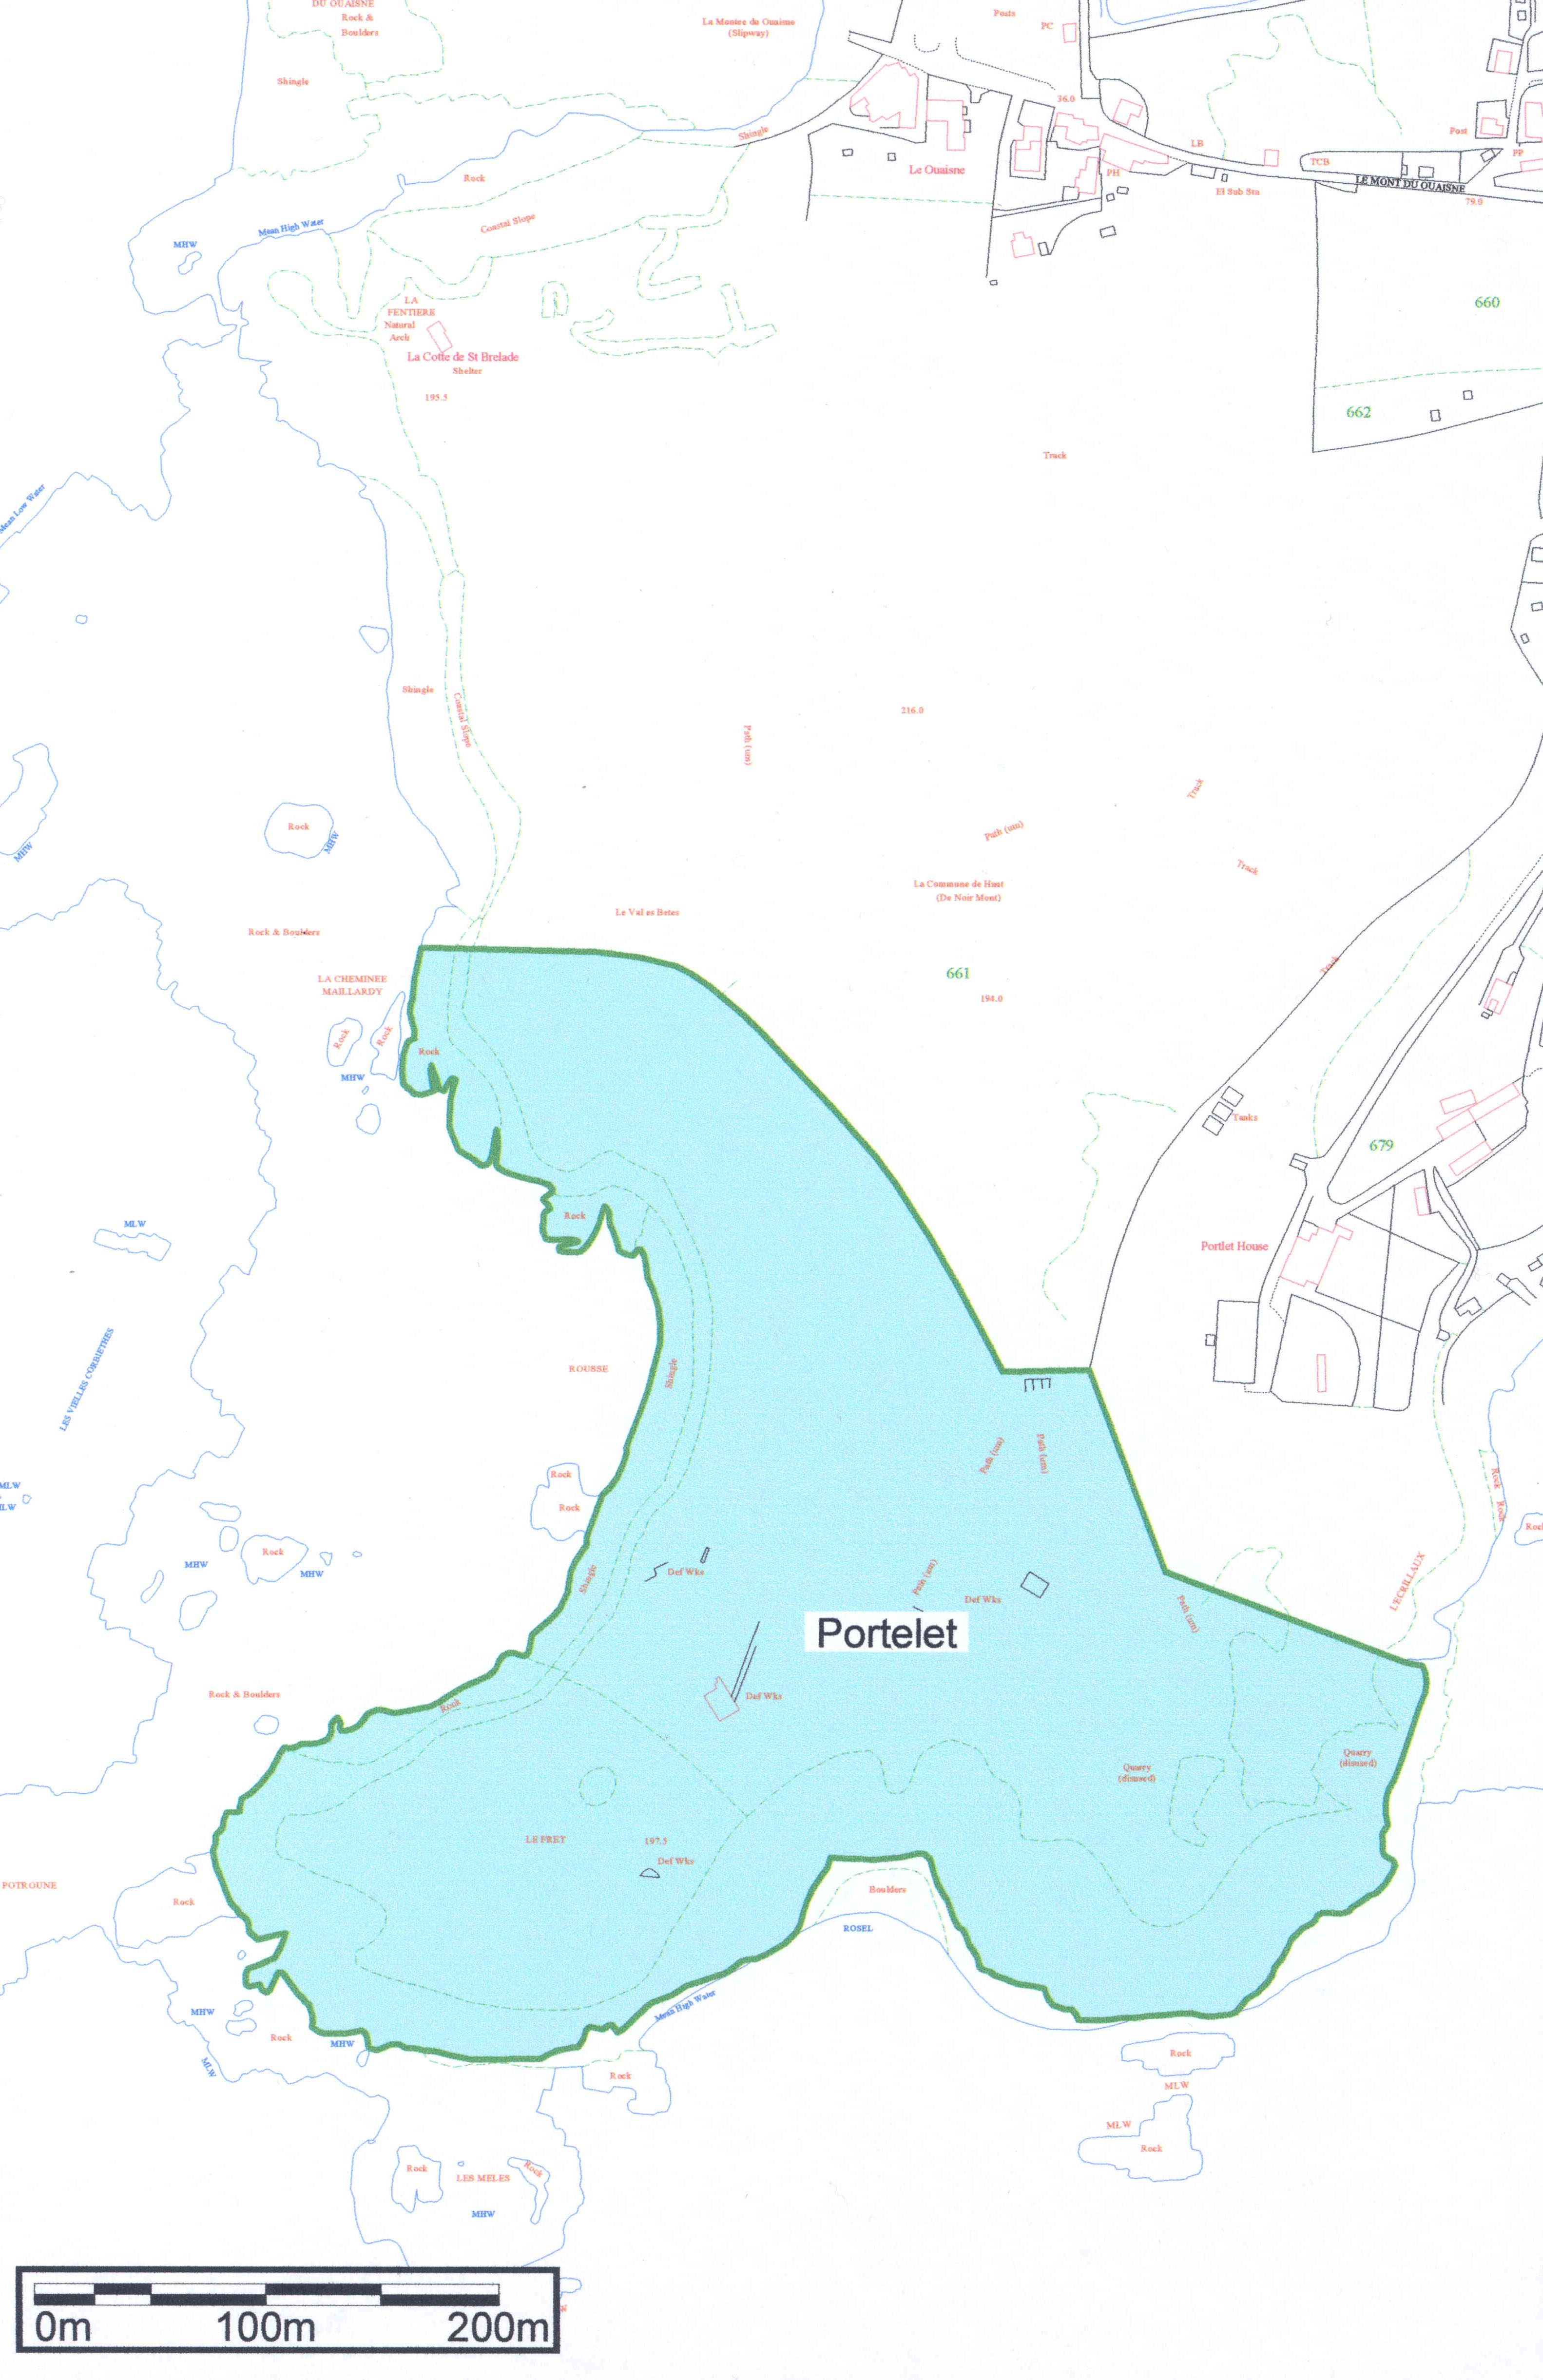 Part 3 - map of Portelet